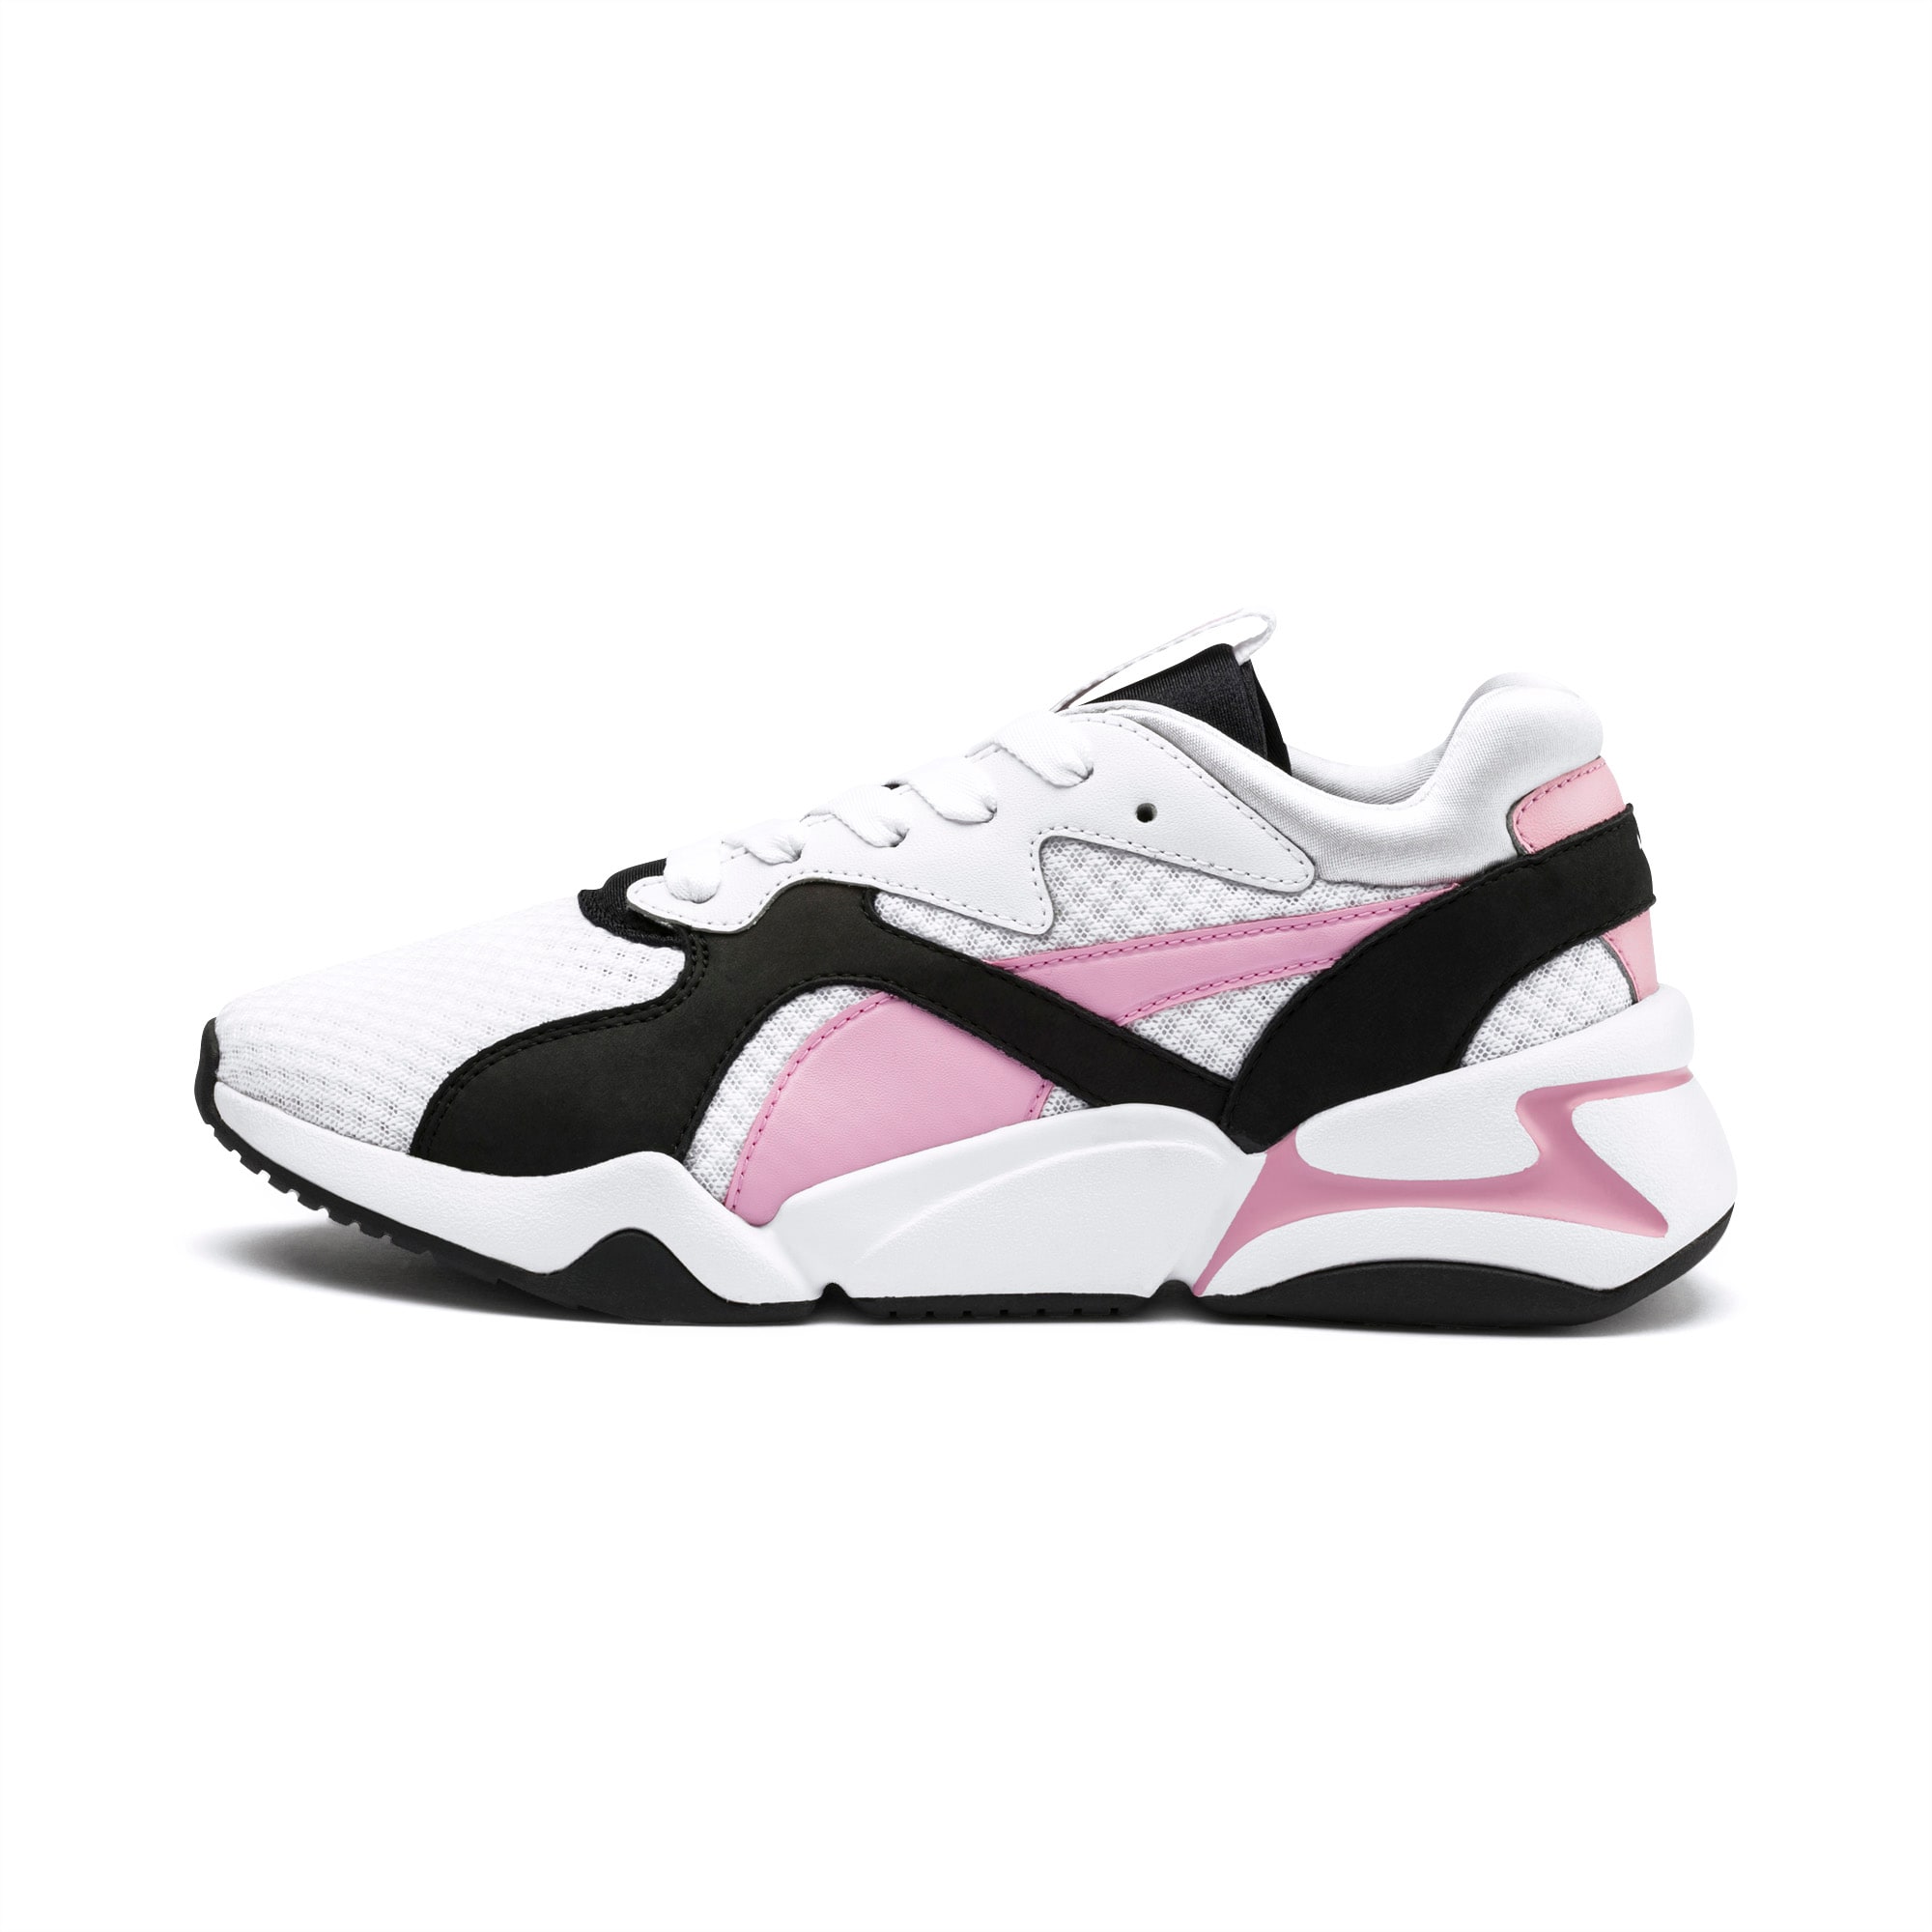 Nova '90s Bloc Damen Sneaker | Puma White-Pale Pink | PUMA KOLLEKTIONEN |  PUMA Deutschland